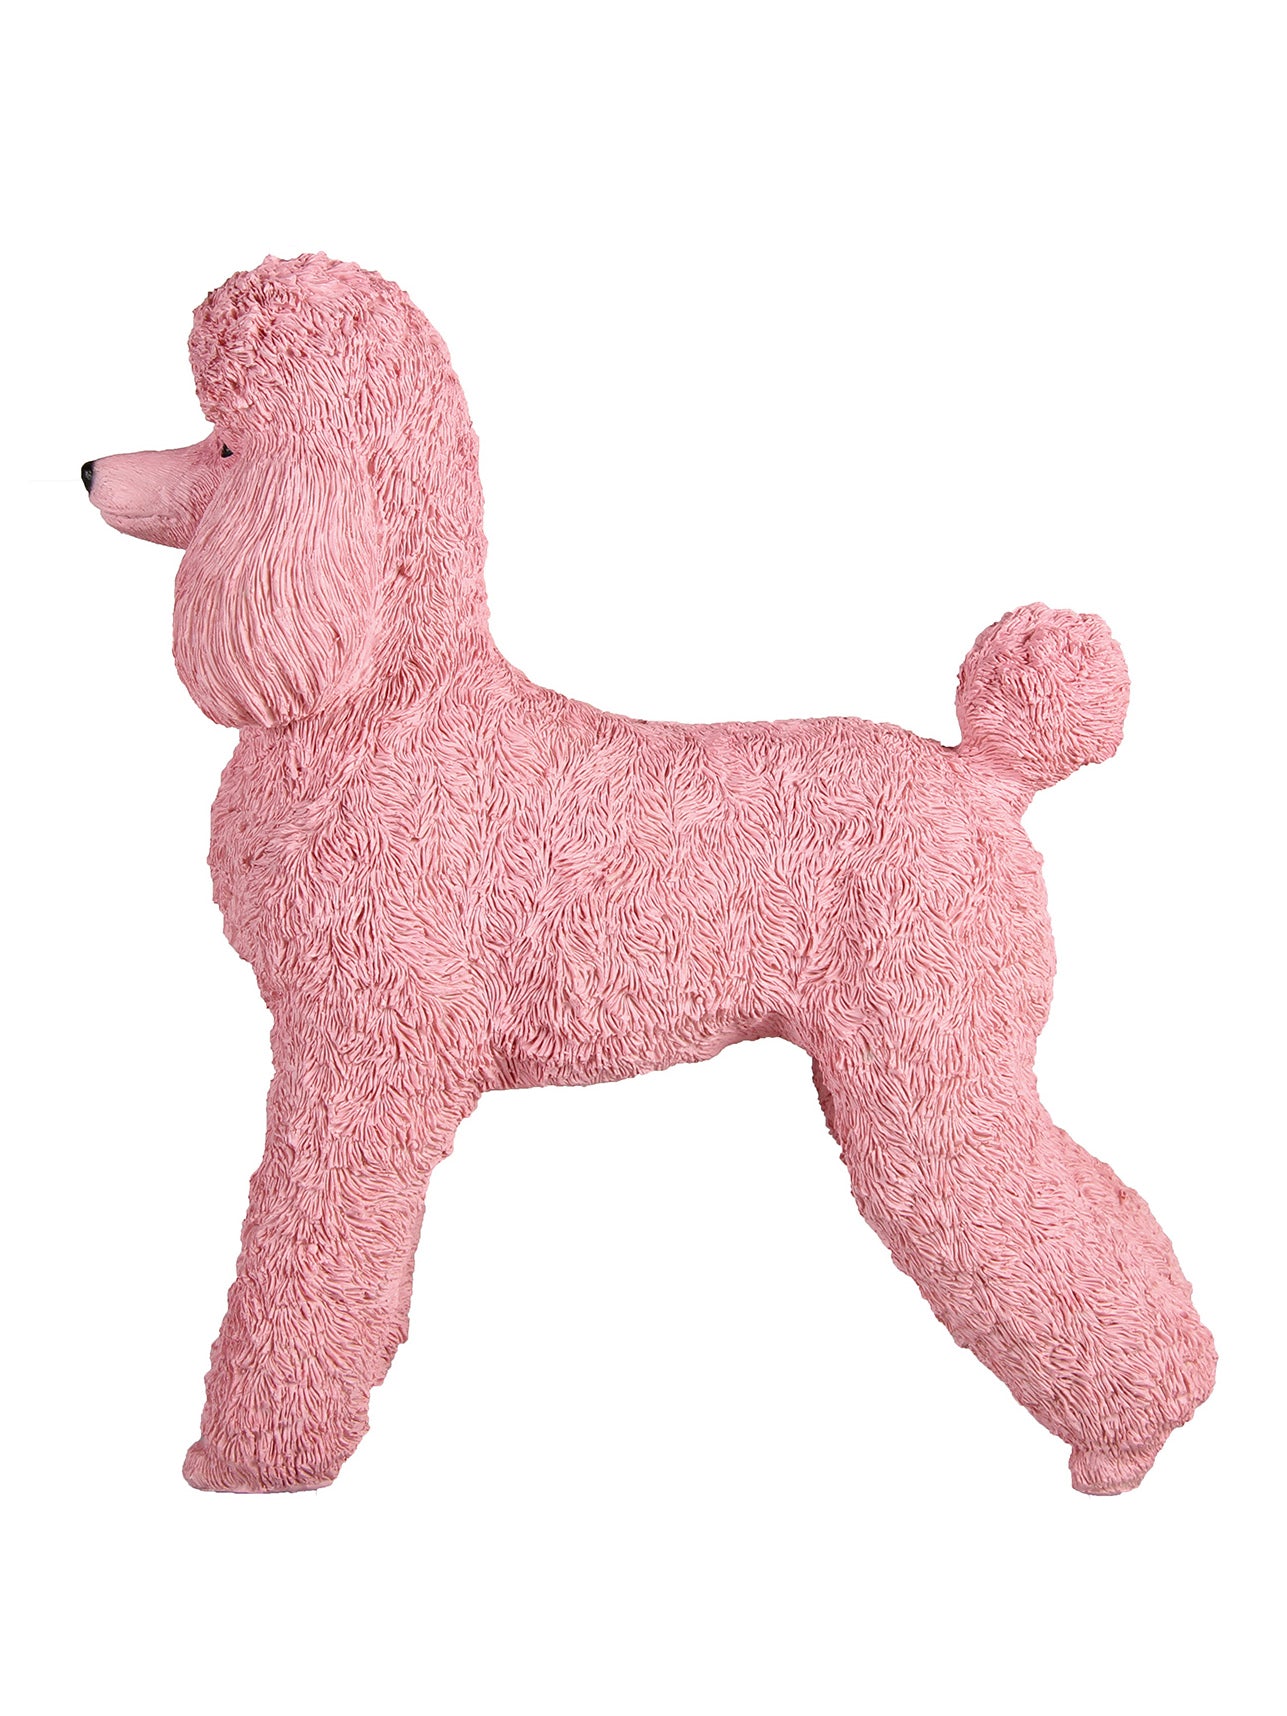 Coinbank poodle standing, pink